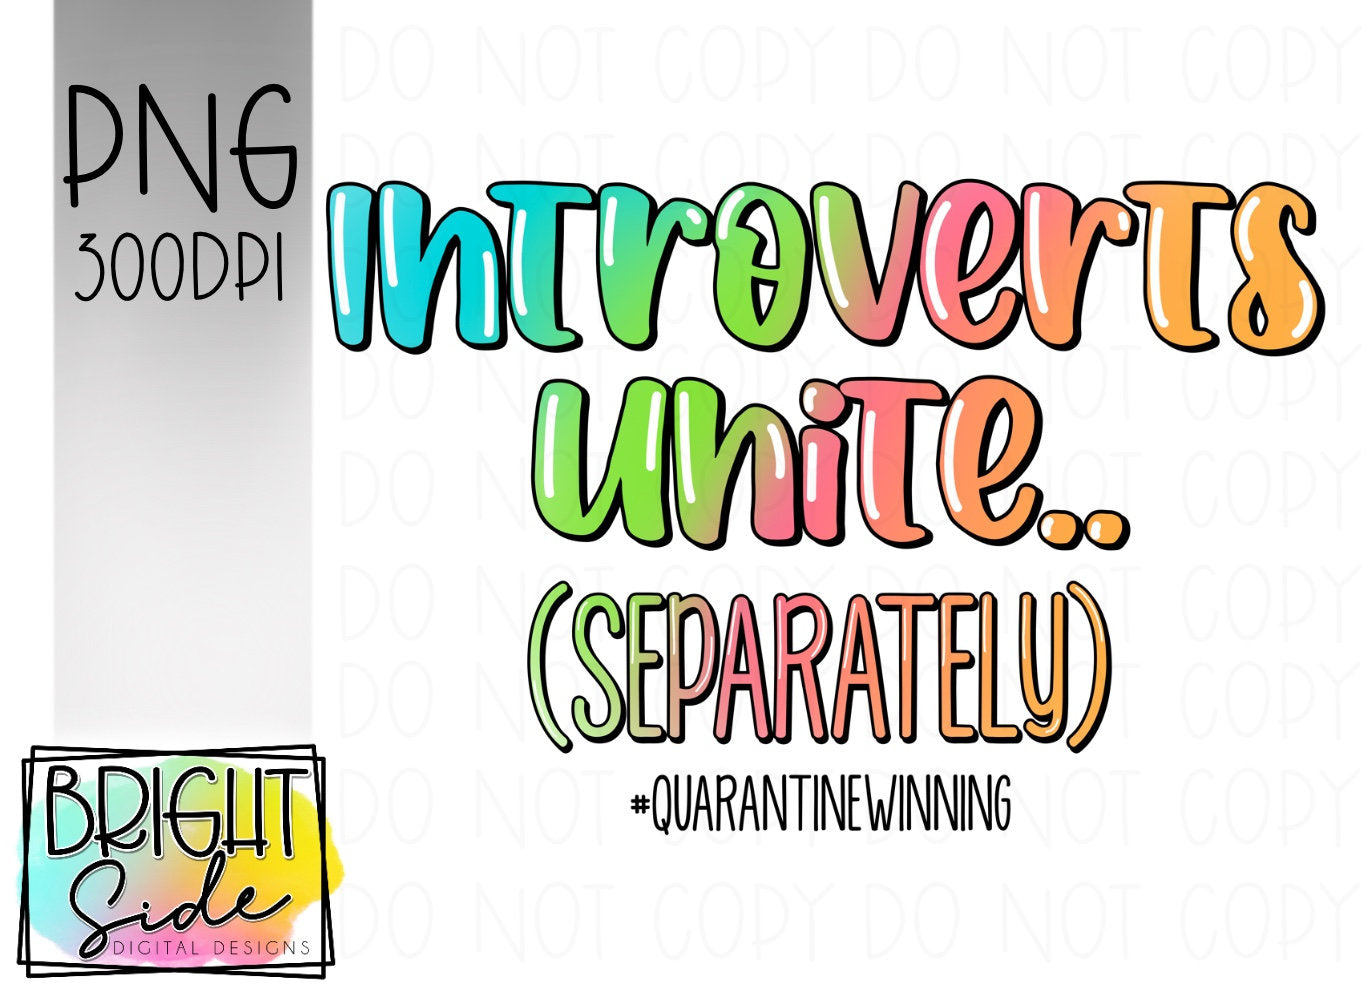 Introverts unite #quarantinewinning